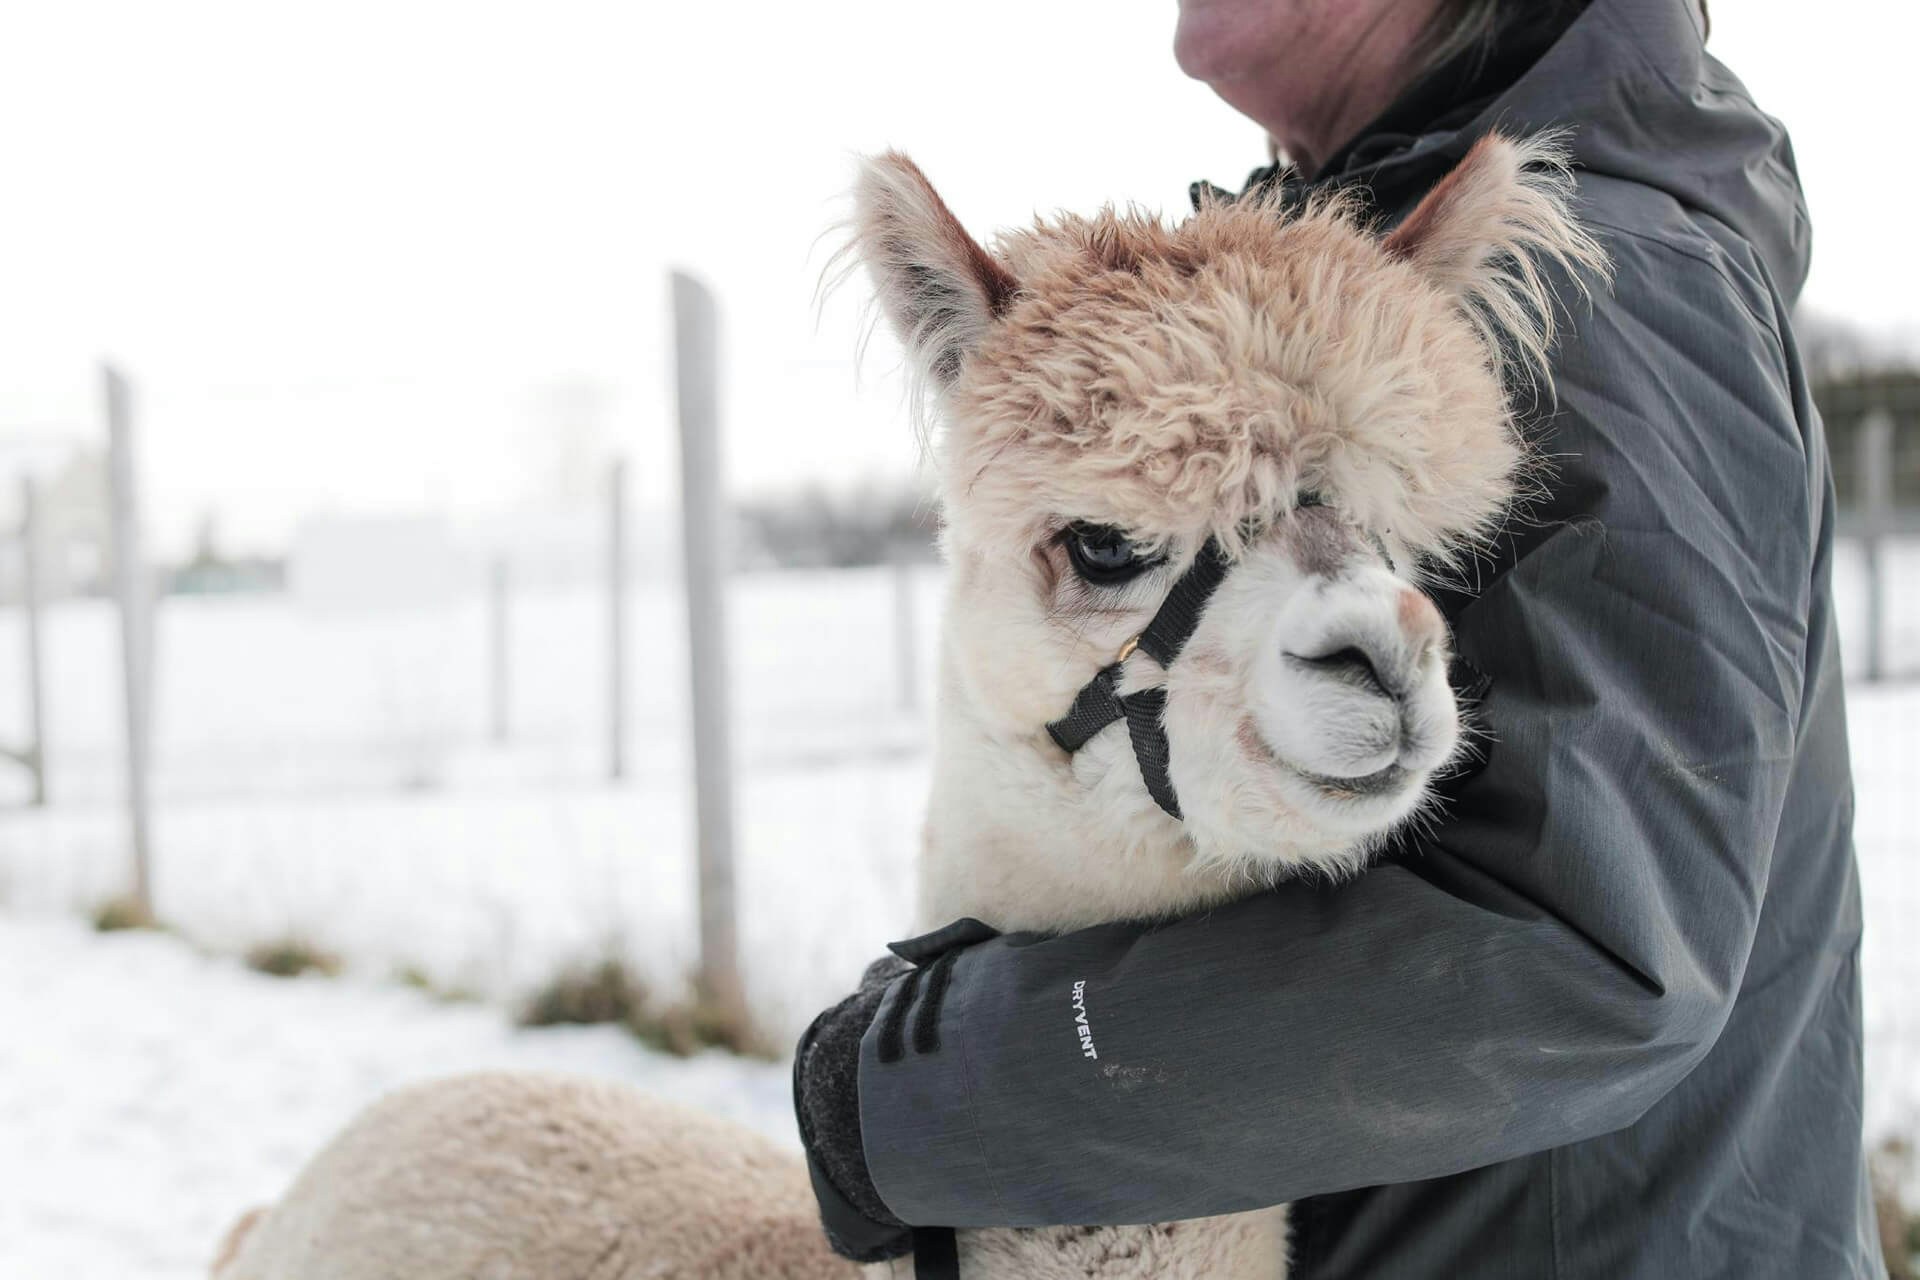 Winterborn Alpaca - Why choose Alpaca fleece? Beyond their